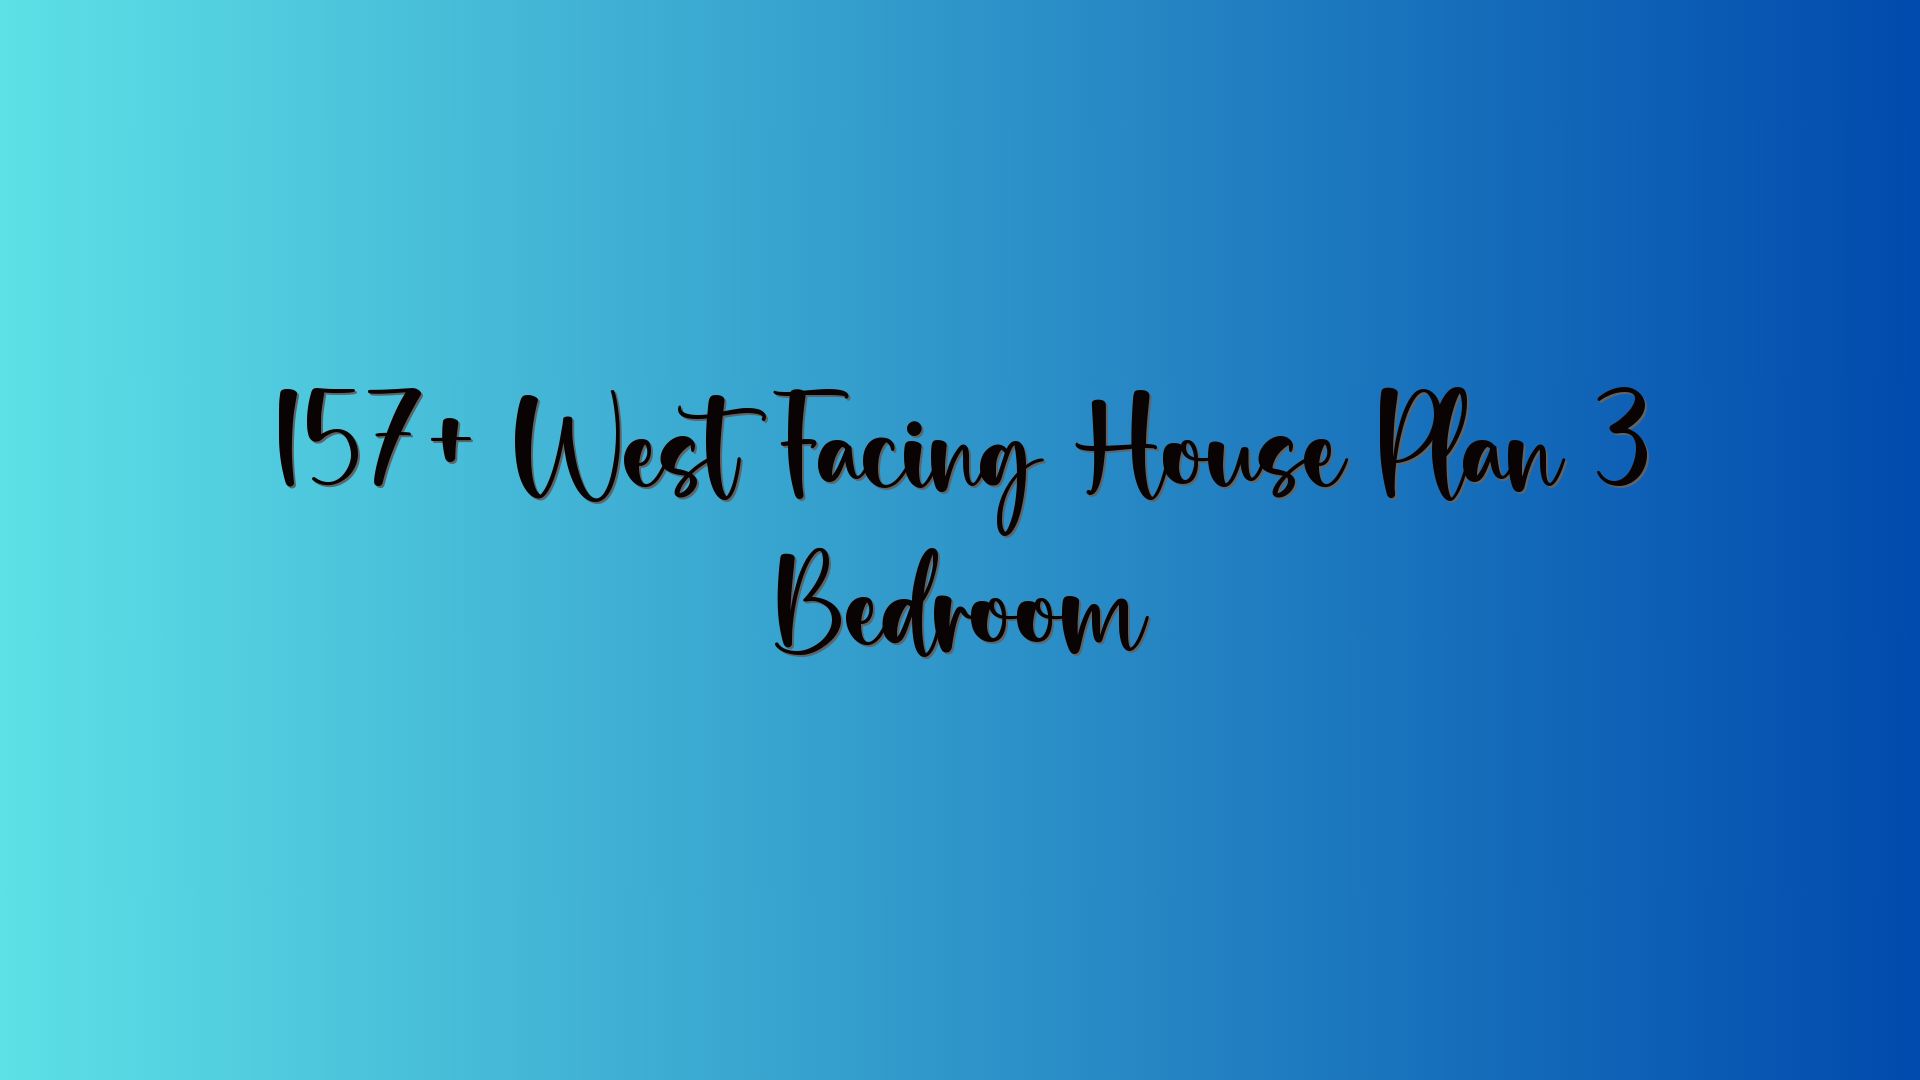 157+ West Facing House Plan 3 Bedroom